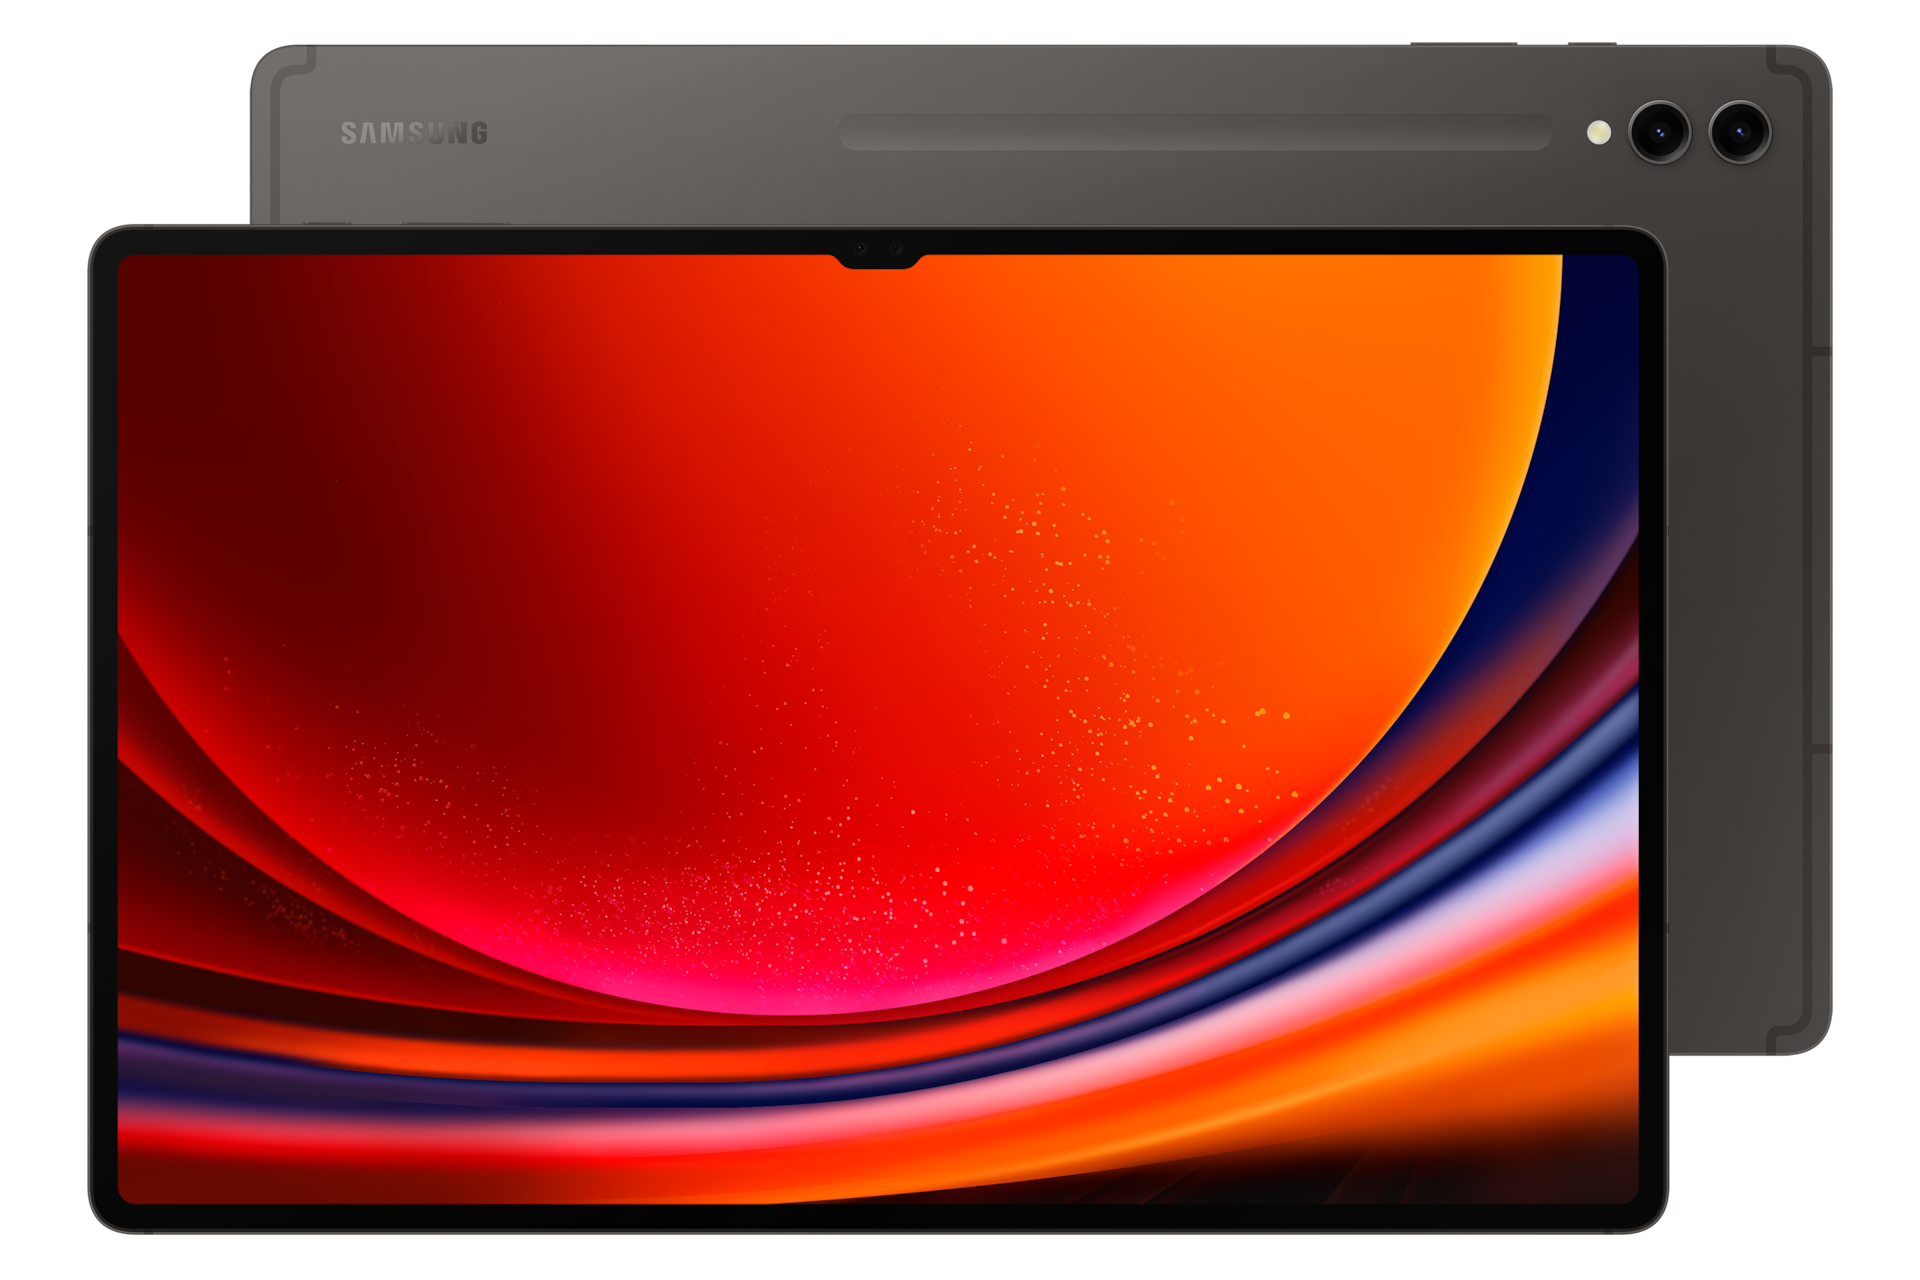 Galaxy Tab S9 Ultra (Wi-Fi), samsung galaxy tab s9 